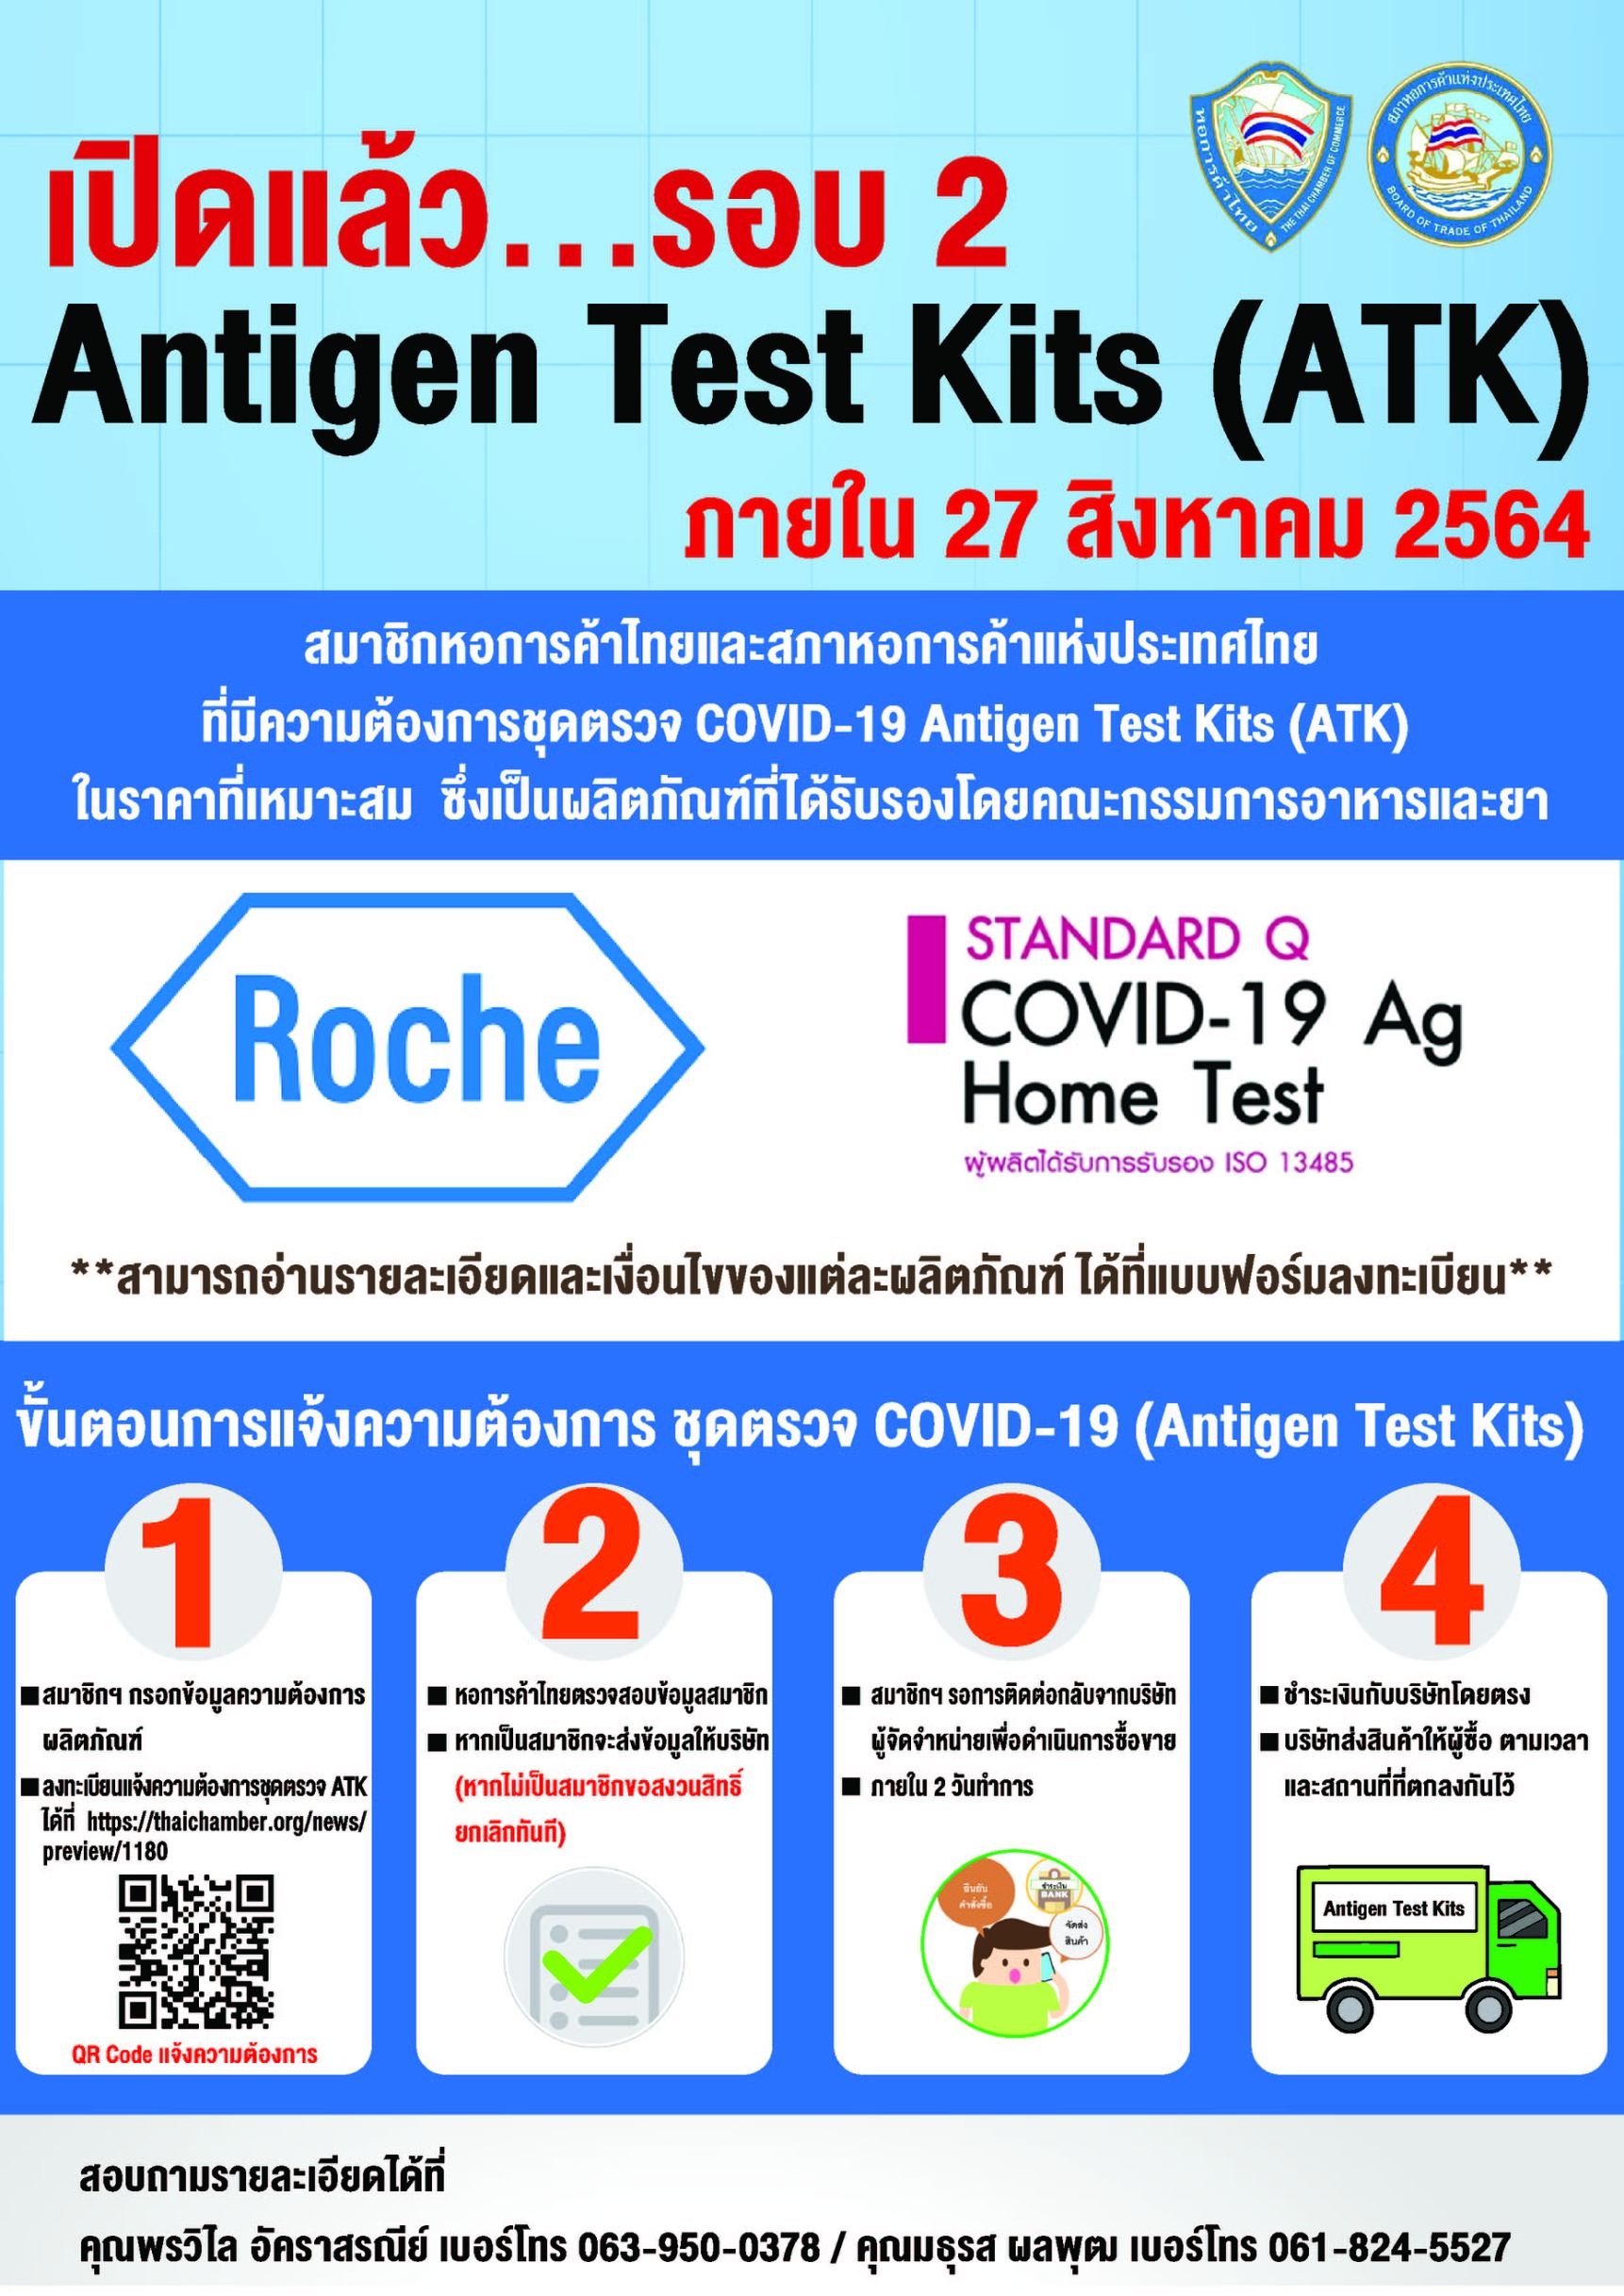 Antigen Test Kits (ATK) เปิดแล้ว … รอบ 2 สำหรับสมาชิกหอการค้าไทยฯ และเครือข่ายหอการค้าฯ เท่านั้น